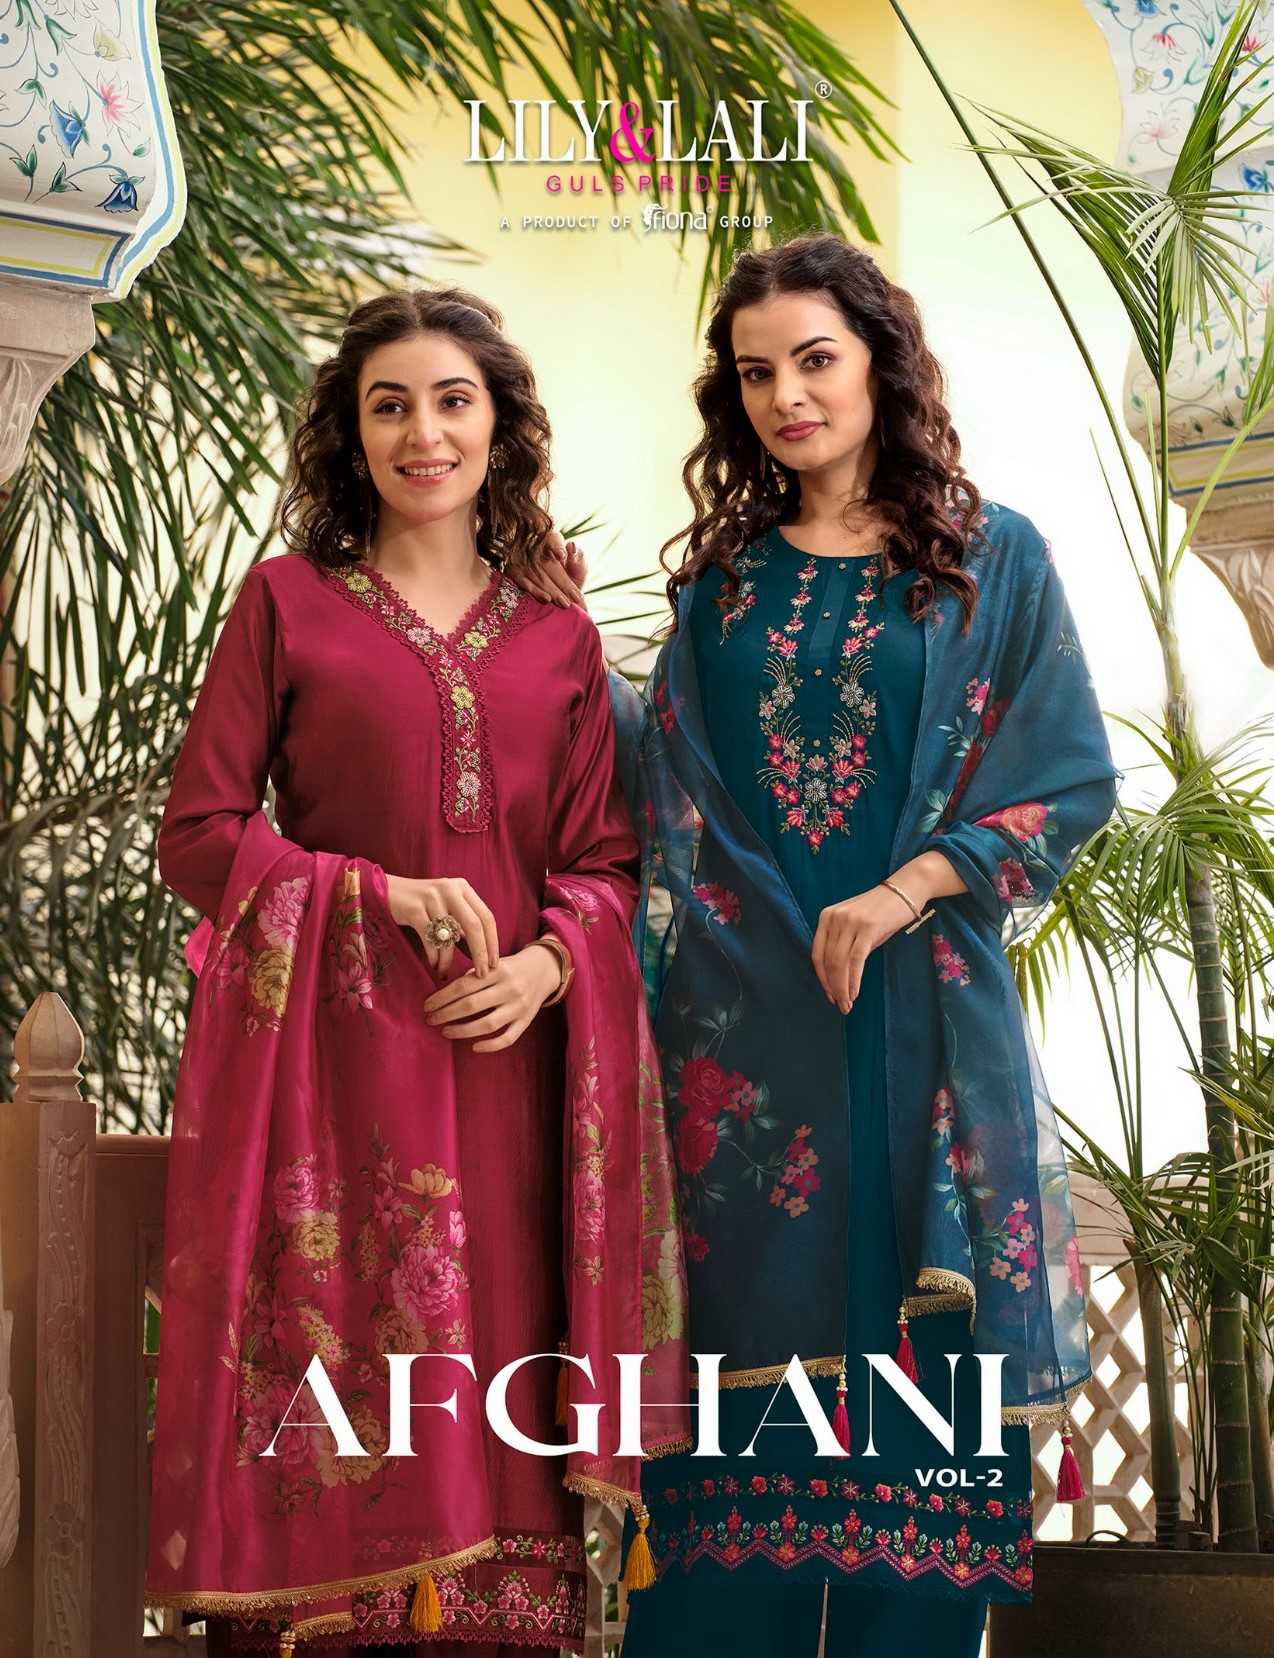 lily and lali afghani vol 2 fullstitch festive wear afgani style pant kurti dupatta